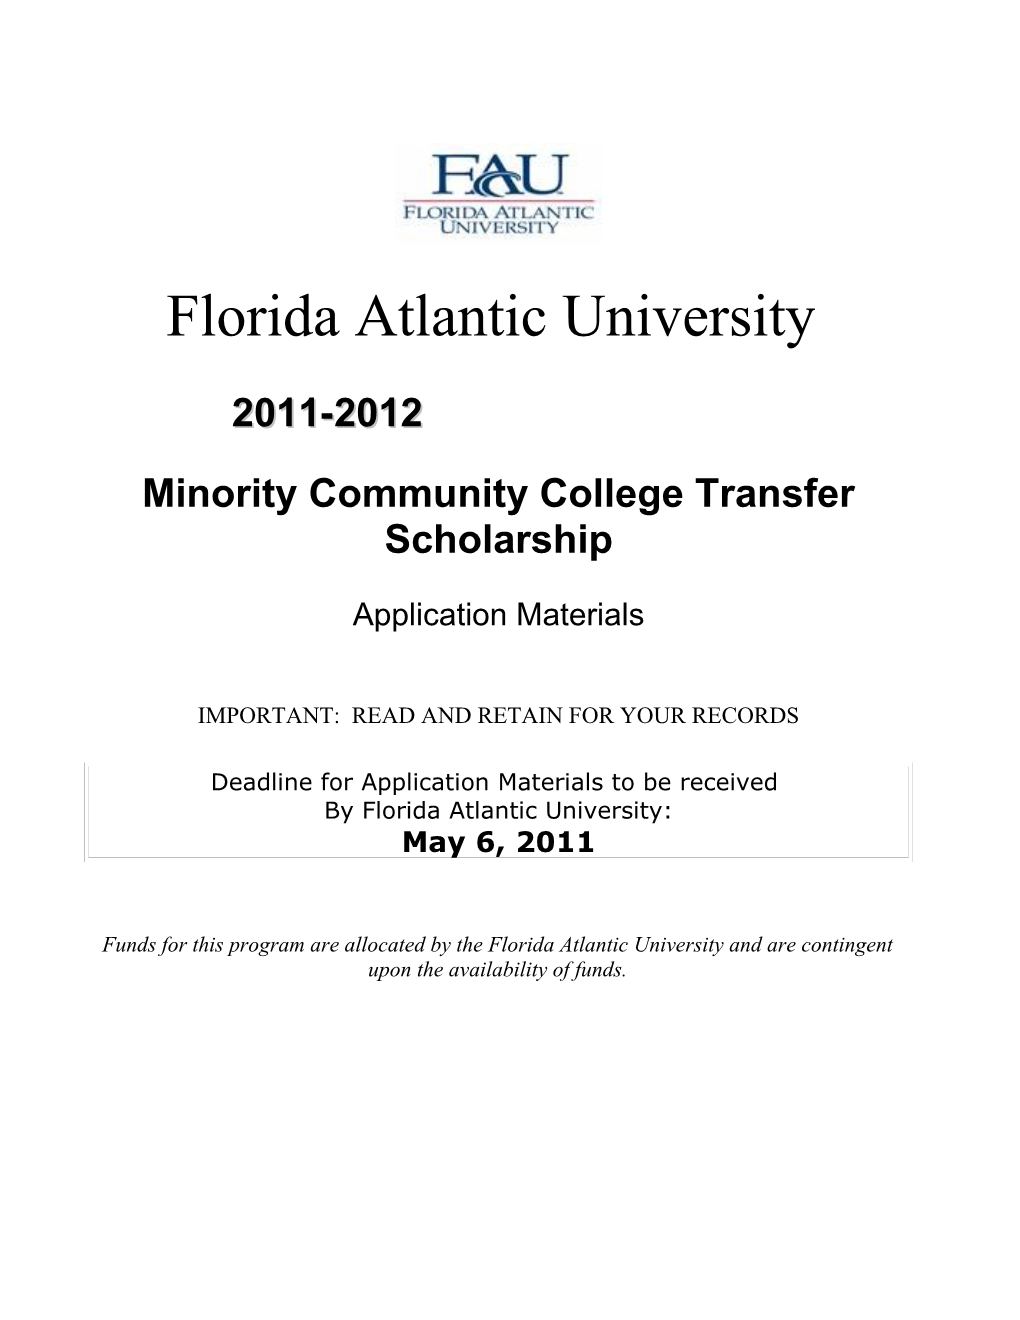 Minoritycommunity College Transfer Scholarship